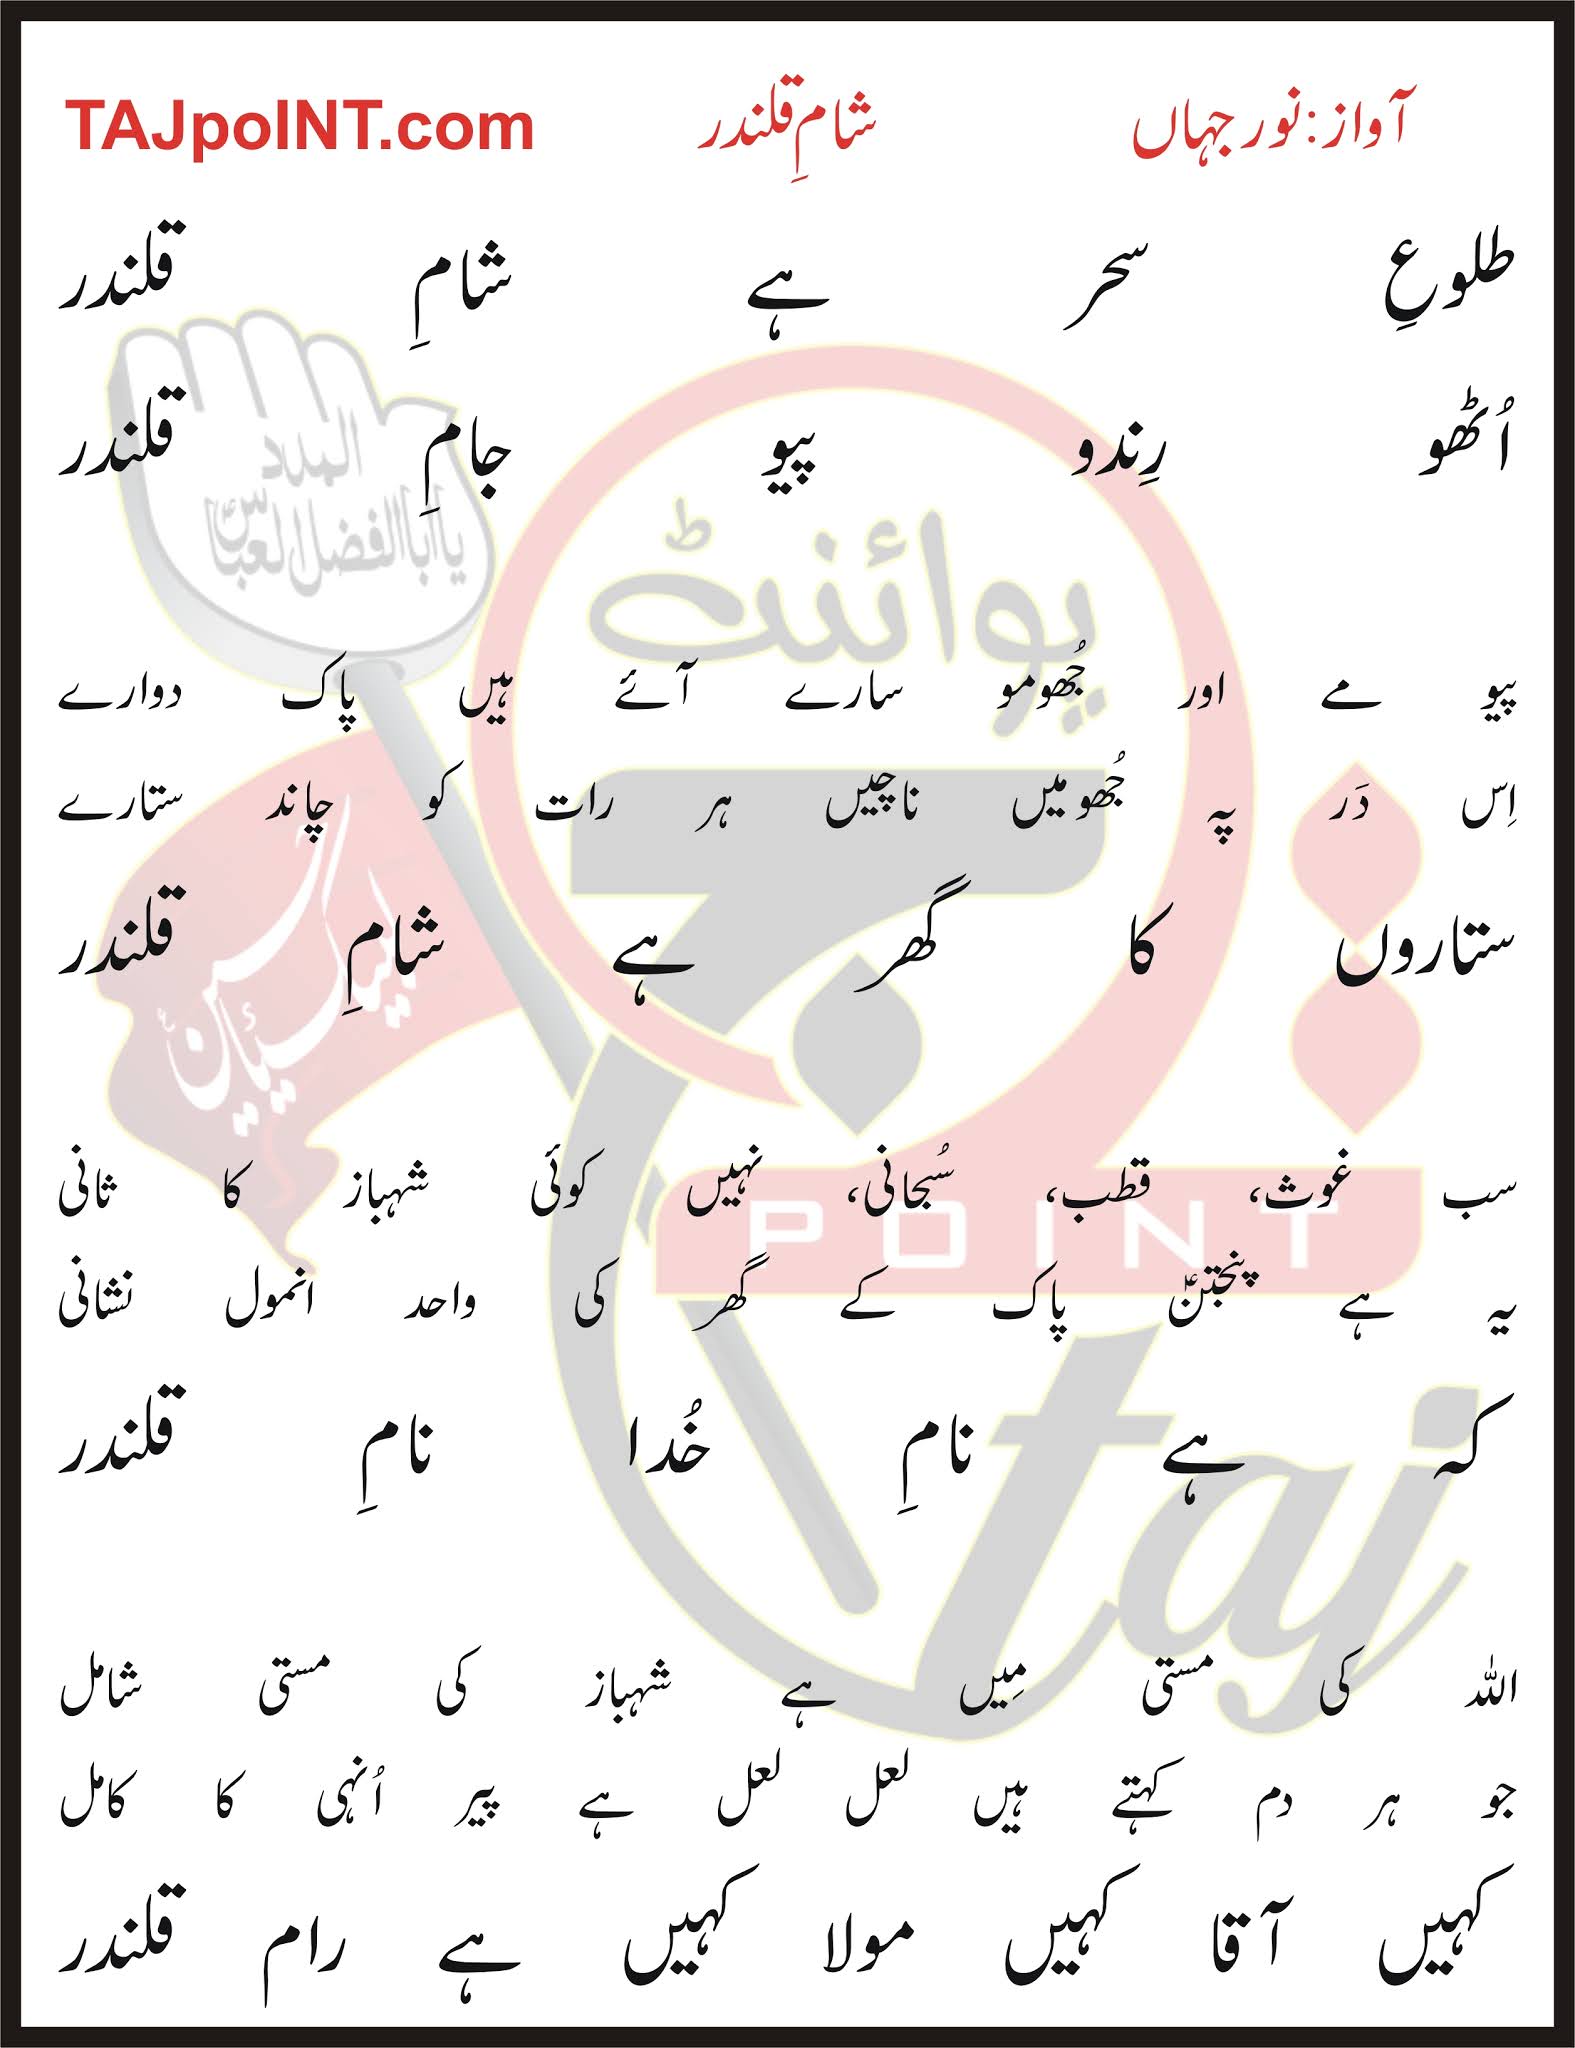 Talu-e-Sehar Hai Sham-e-Qalandar Lyrics In Urdu and Roman Urdu